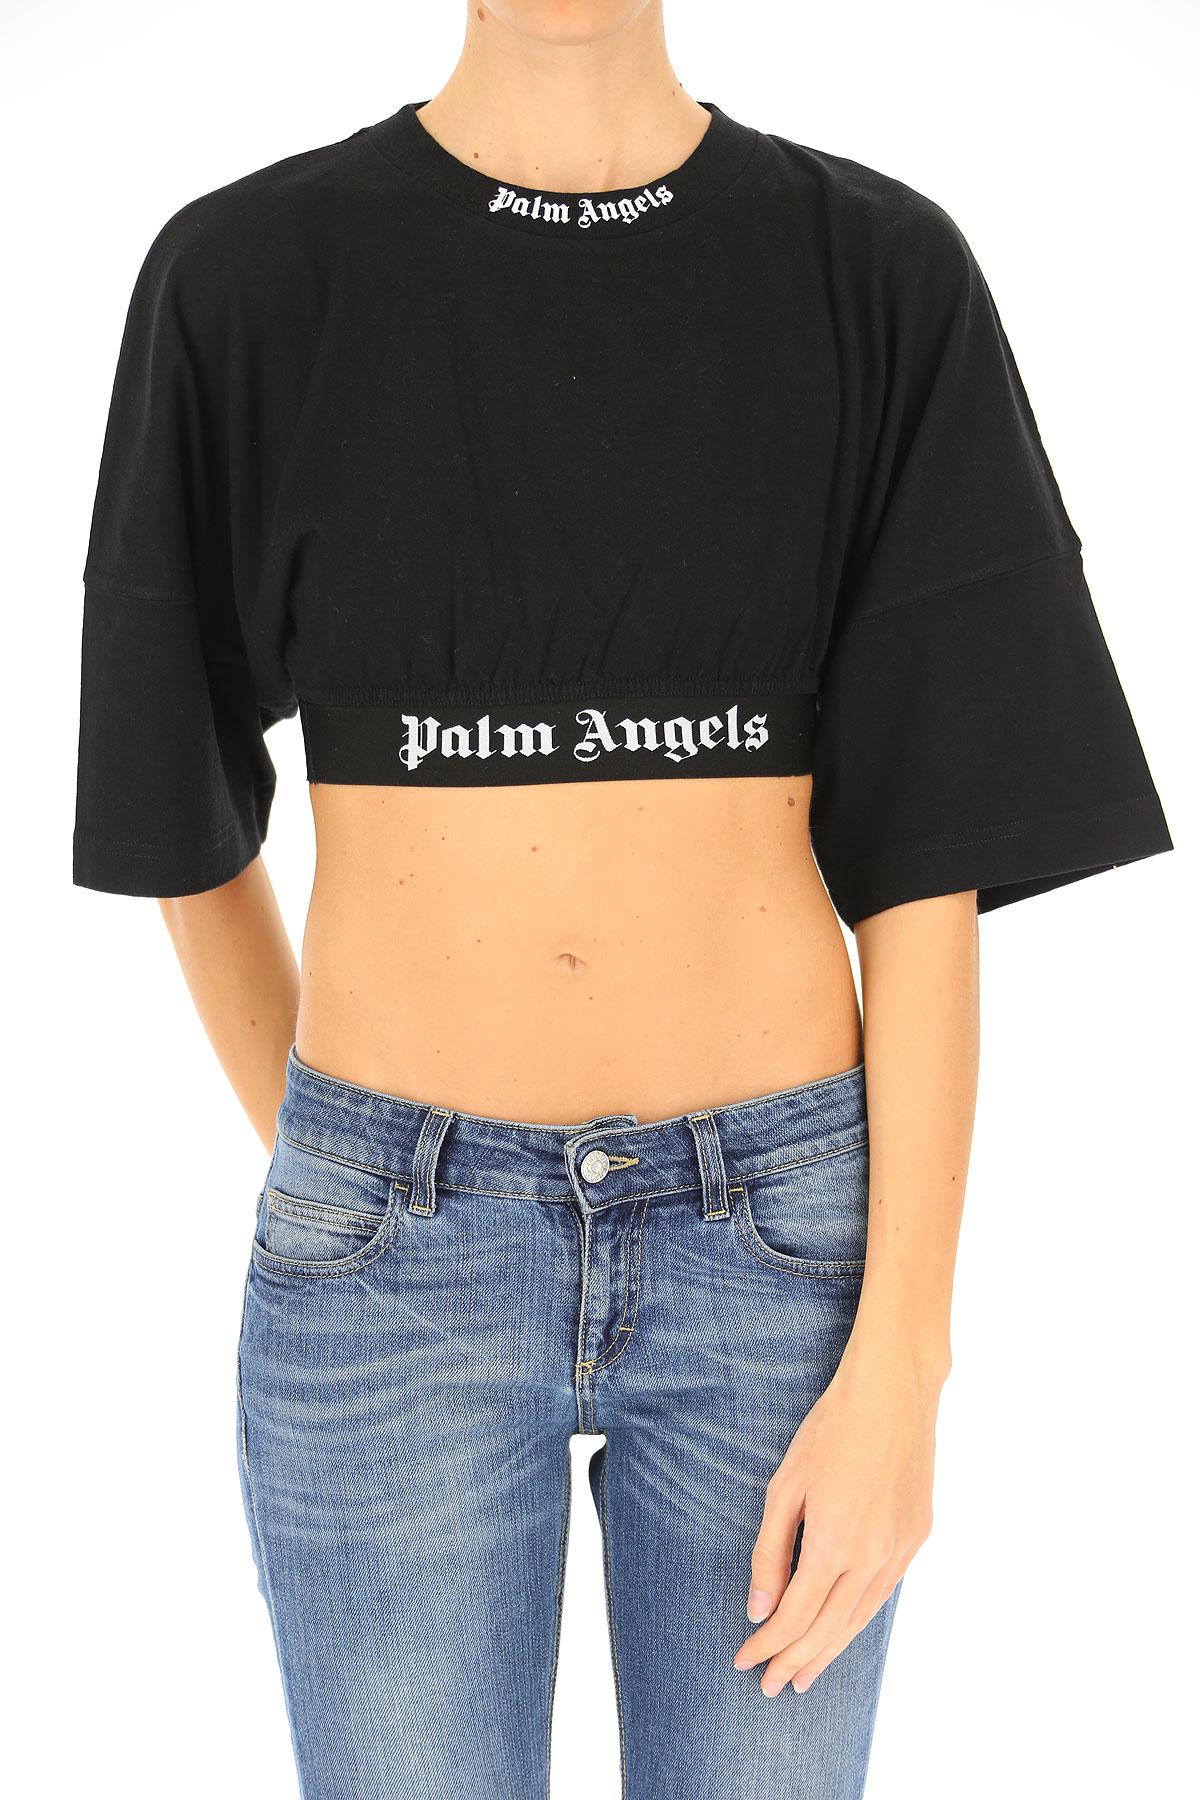 palm angels t shirt women's sale